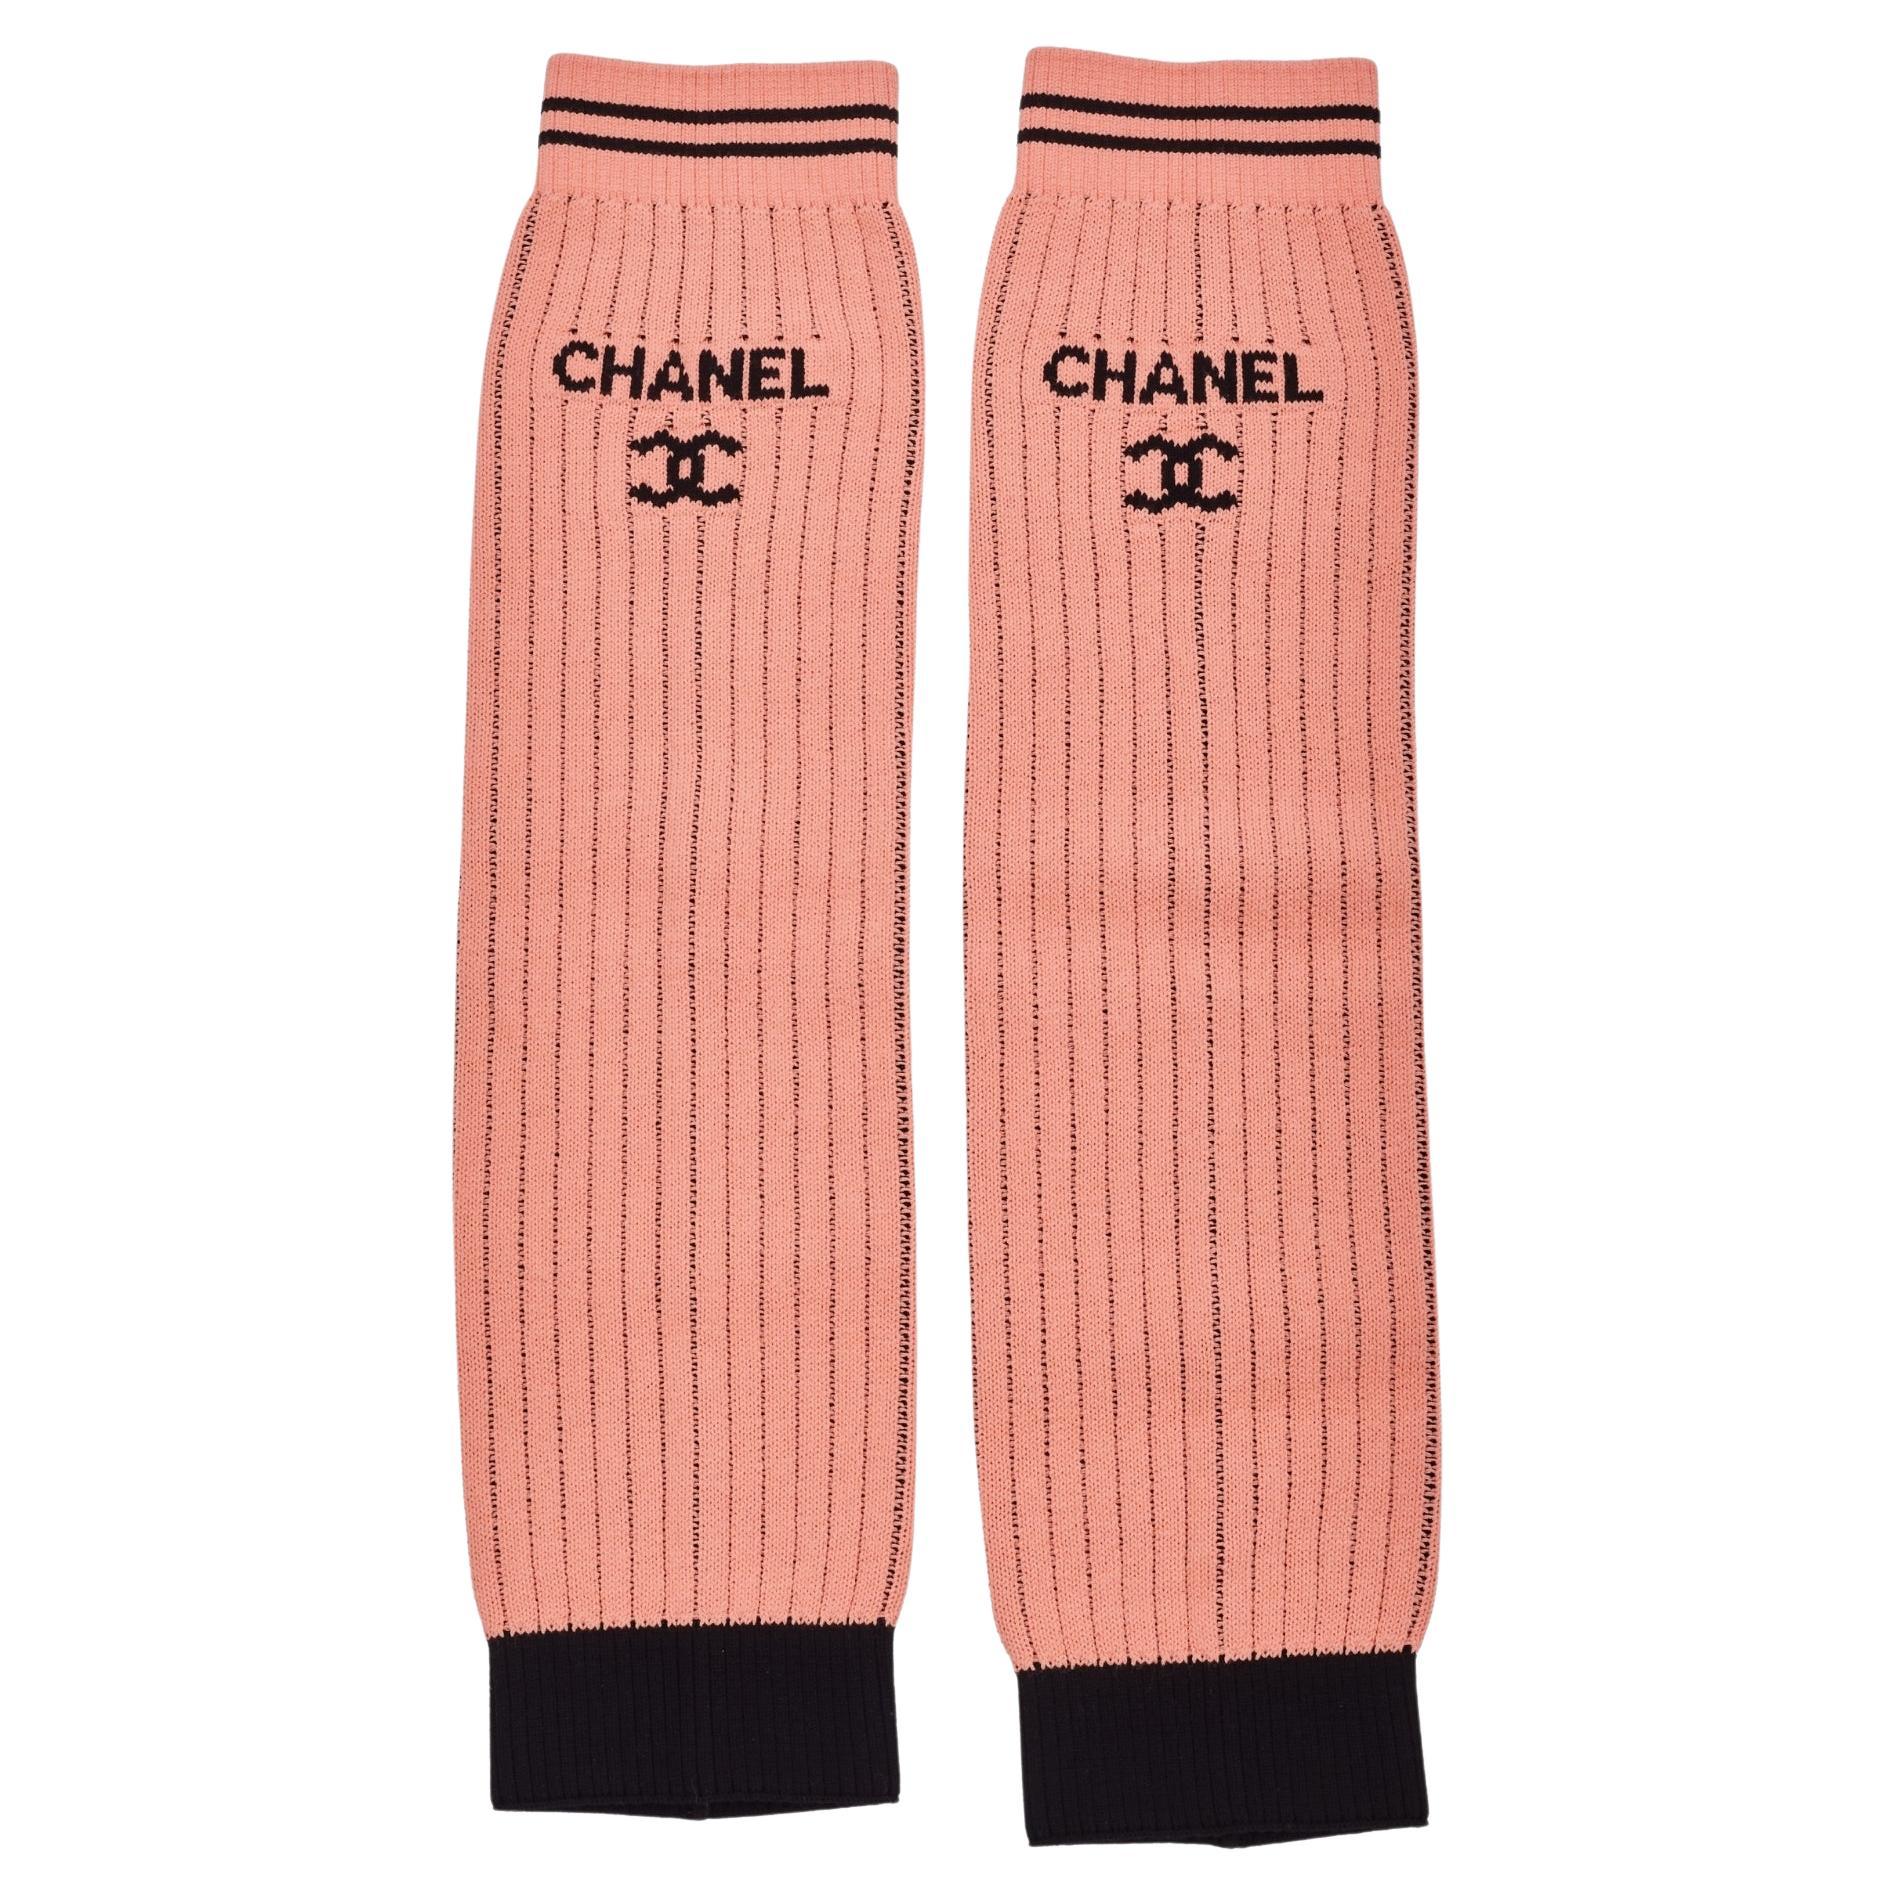 Chanel Logo Apricot Knit Leg Warmers Gaiters